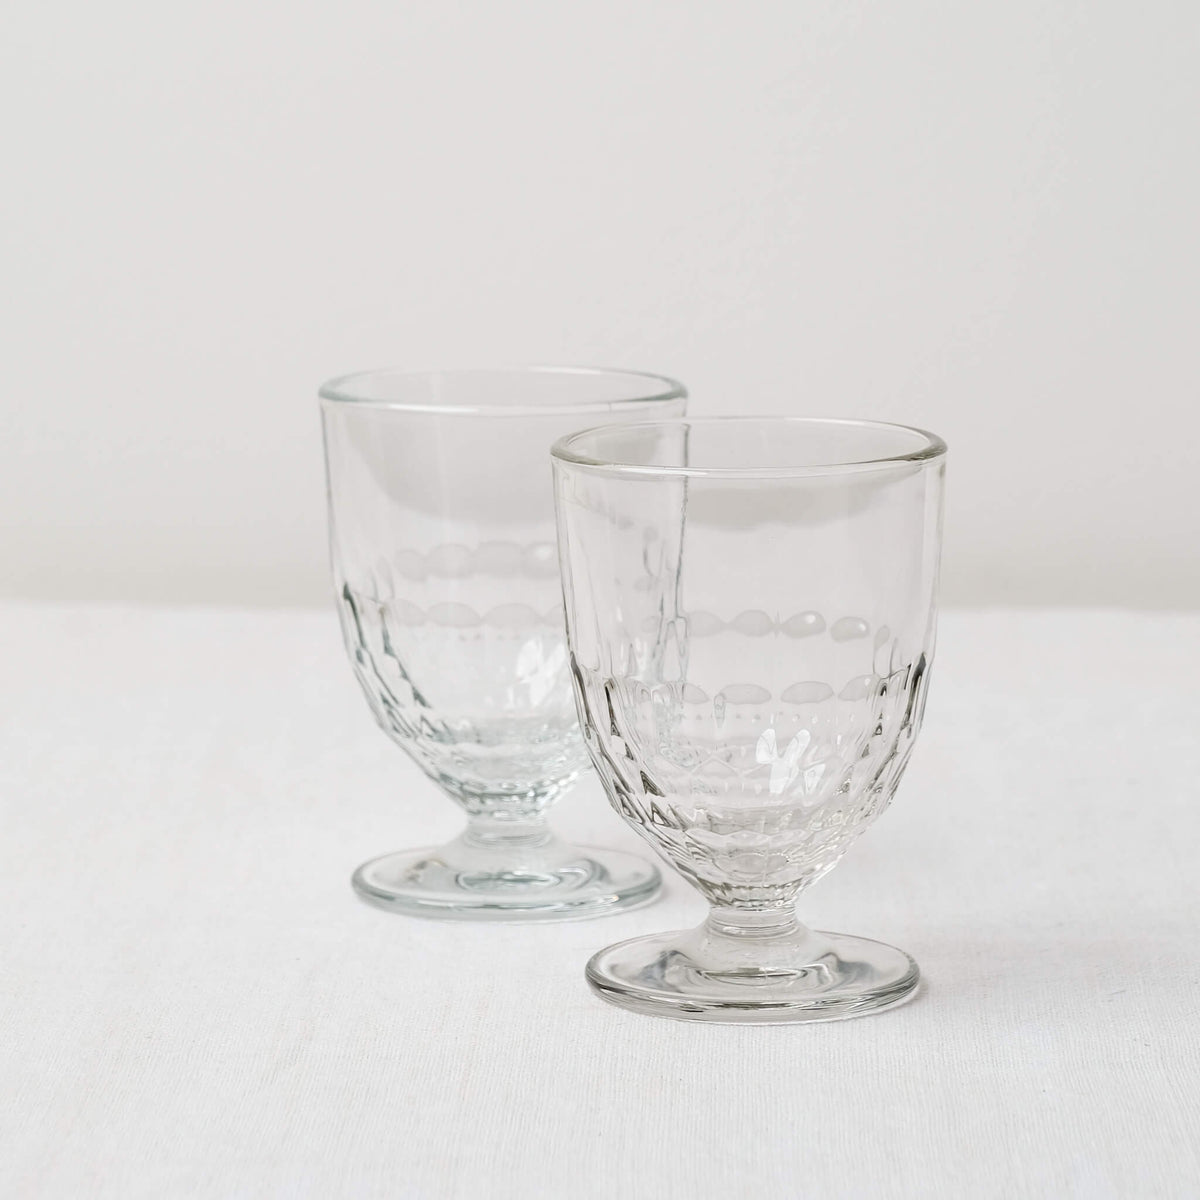 Lens Bistro Wine Glass - Adorn Goods